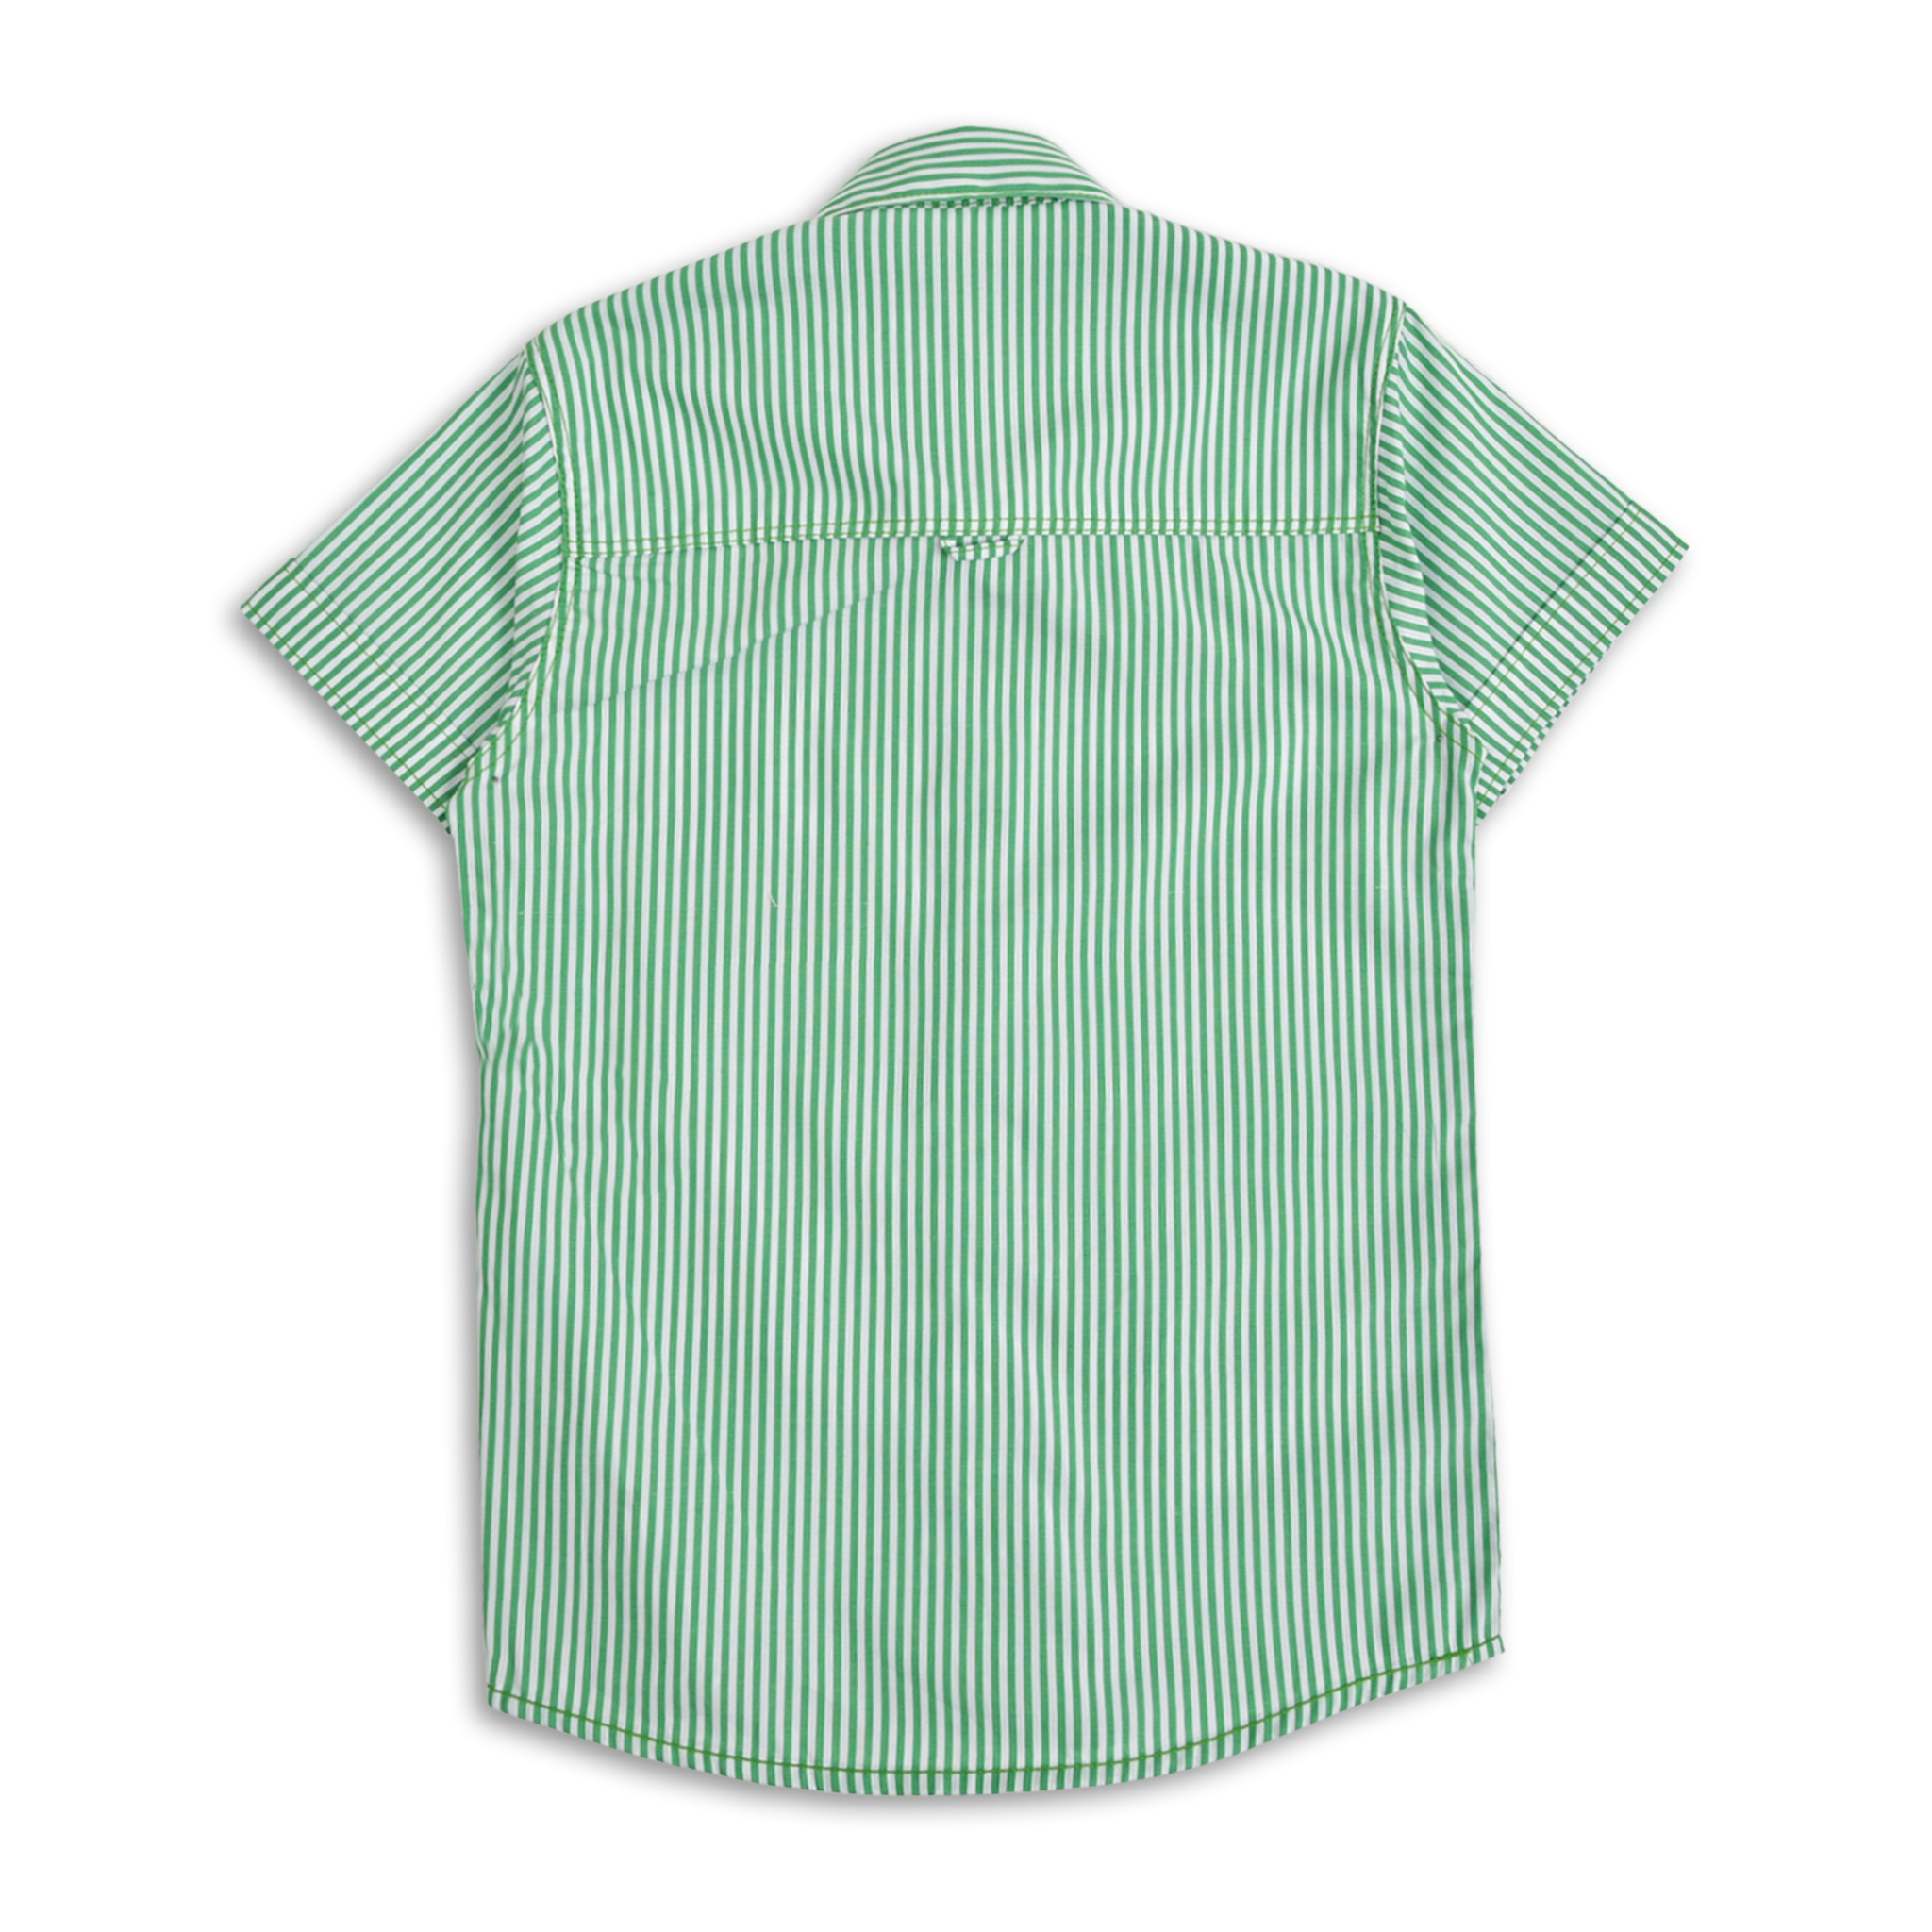 Mint Striped Casual Shirt